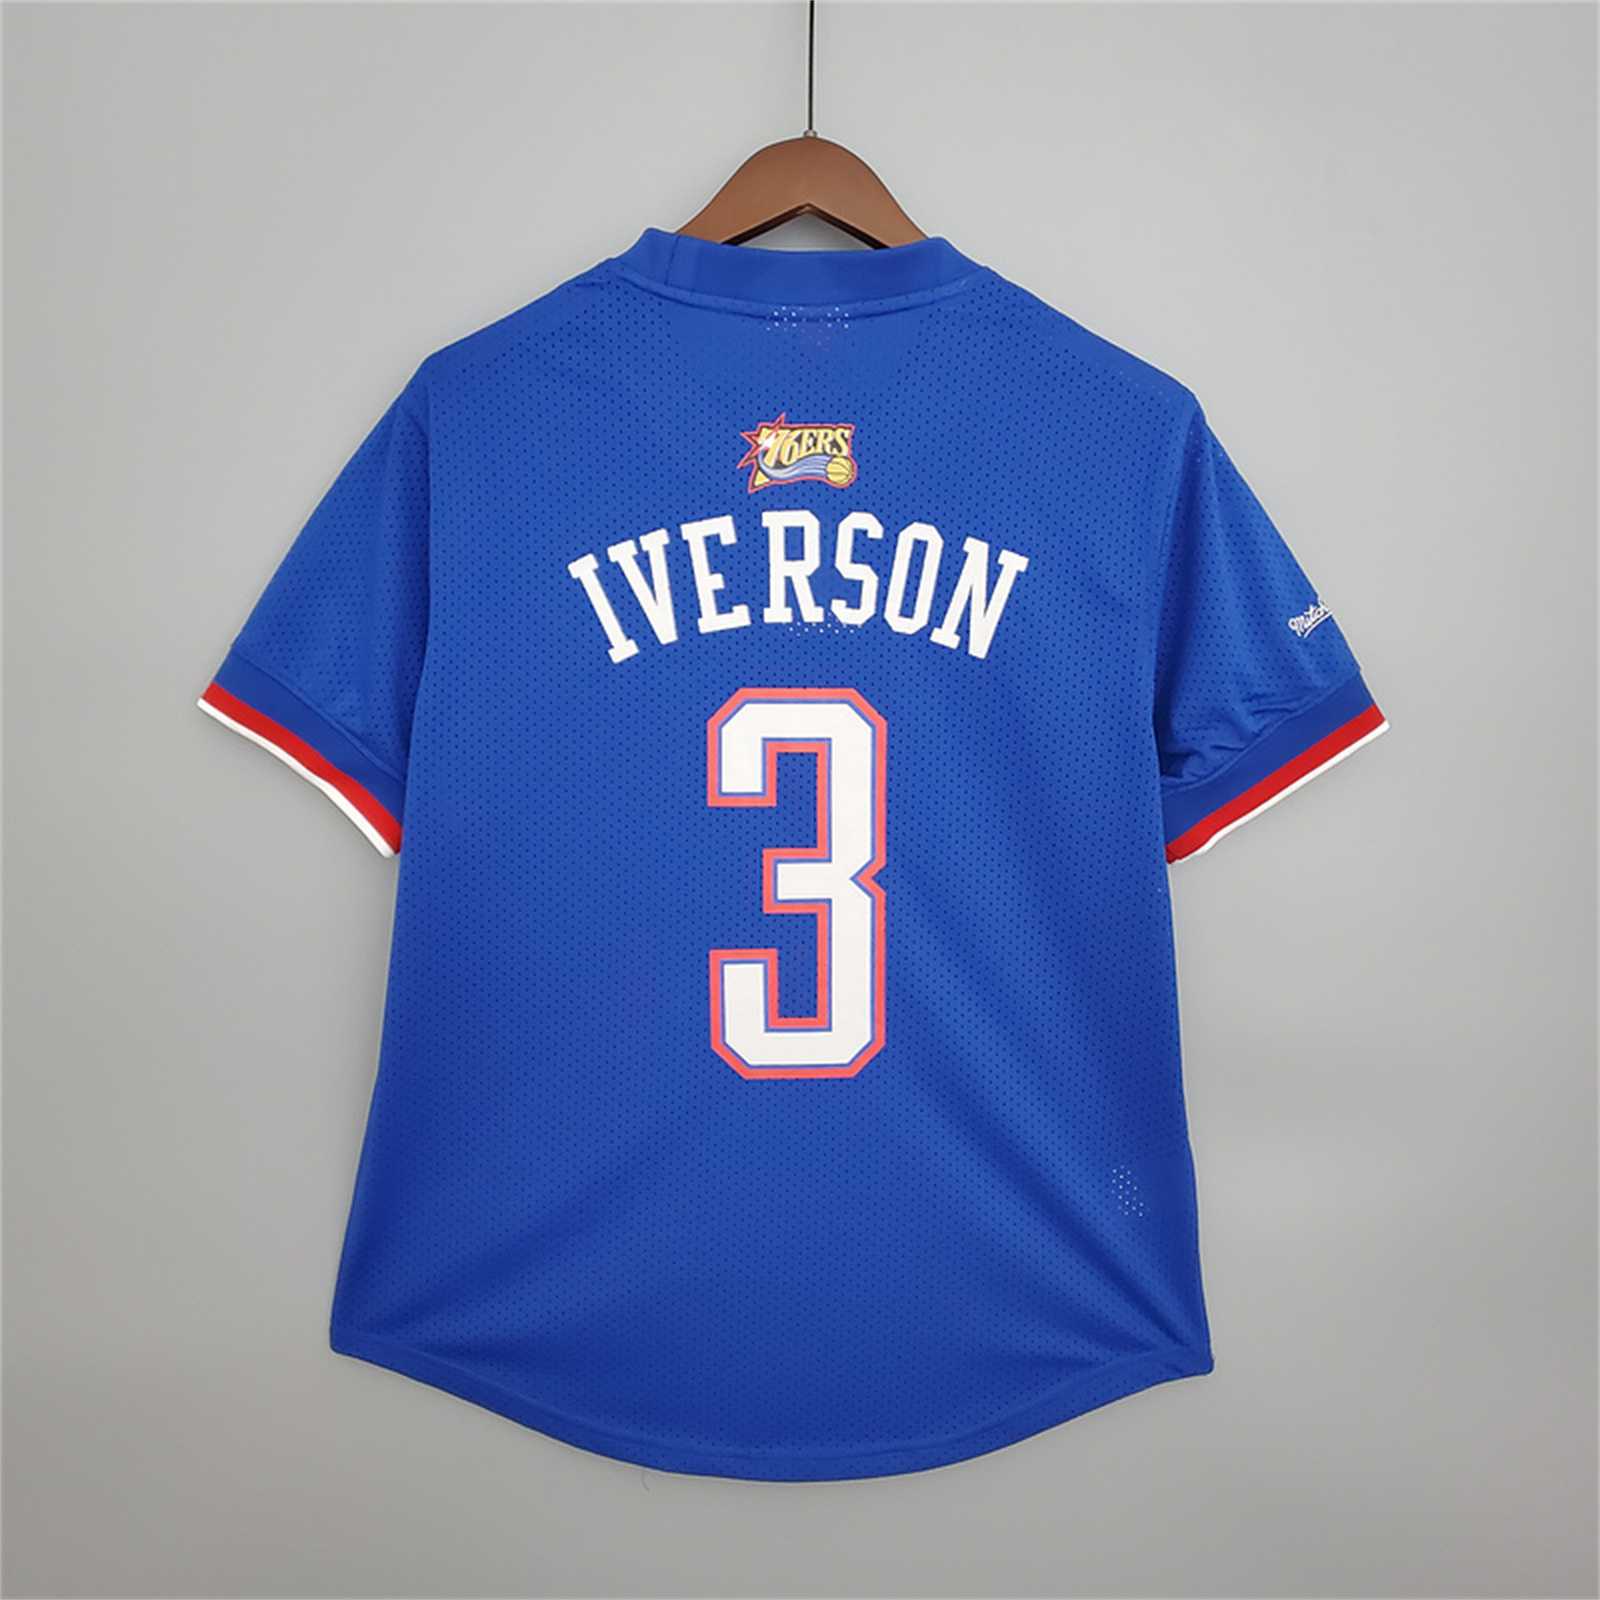 Mitchellness 09 Season All-Star Game No. 3 Iverson Retro Mesh Short Sleeve